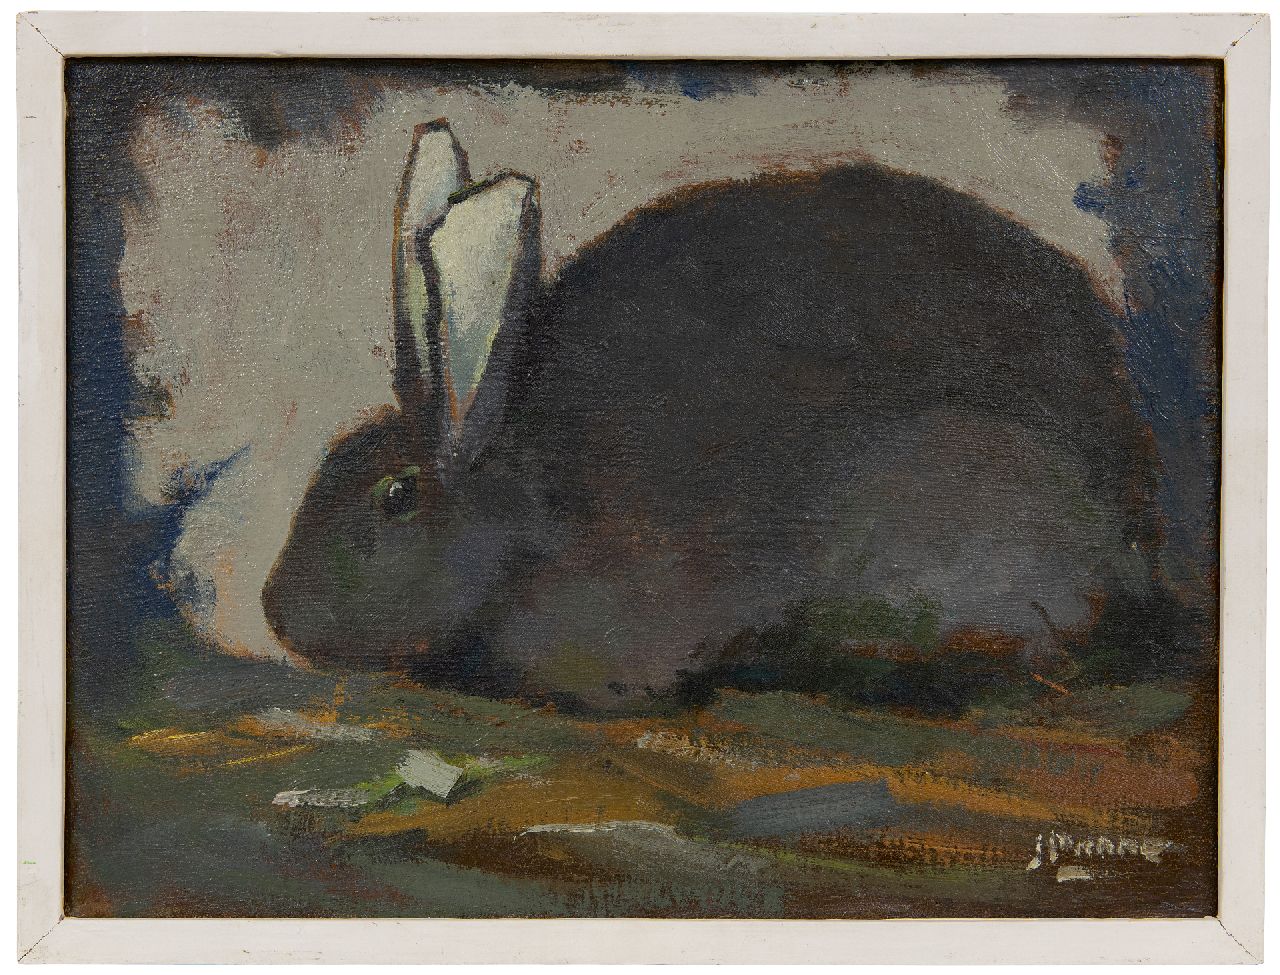 Ponne J.  | Jentinus Ponne | Paintings offered for sale | Rabbit, oil on canvas 30.2 x 40.2 cm, signed l.r.